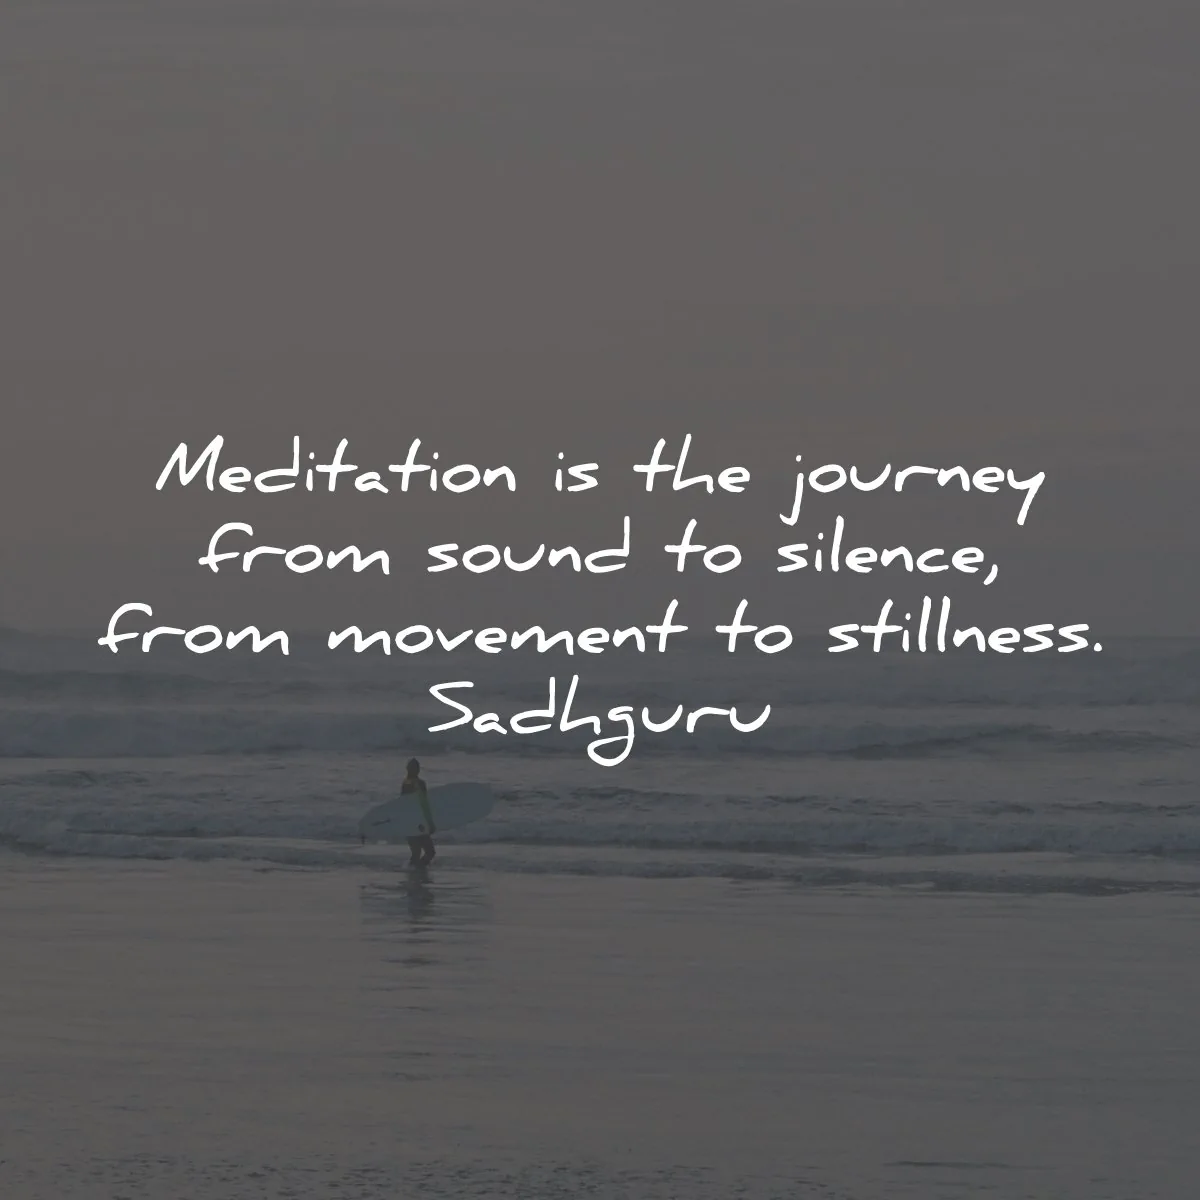 sadhguru quotes meditation journey sound silence wisdom